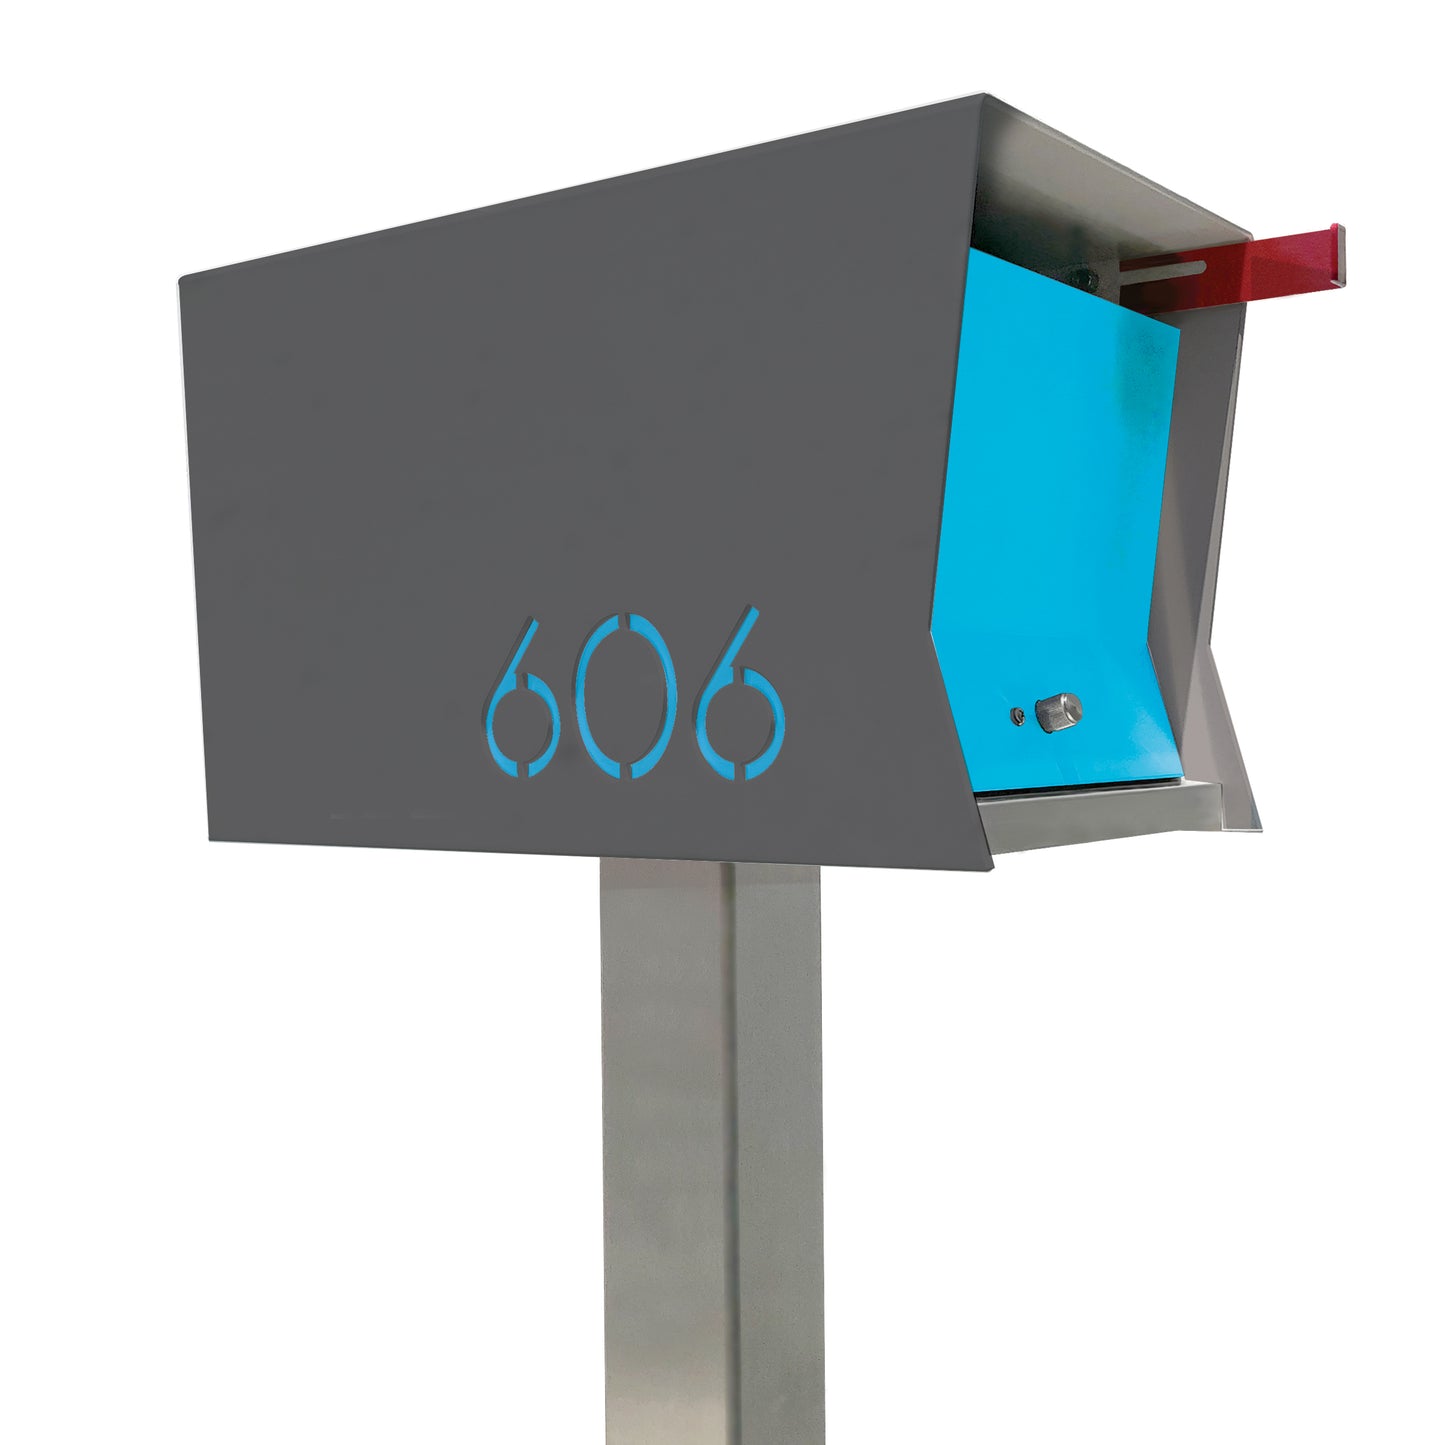 The Original Retrobox in DESIGNER GREY - Modern Mailbox